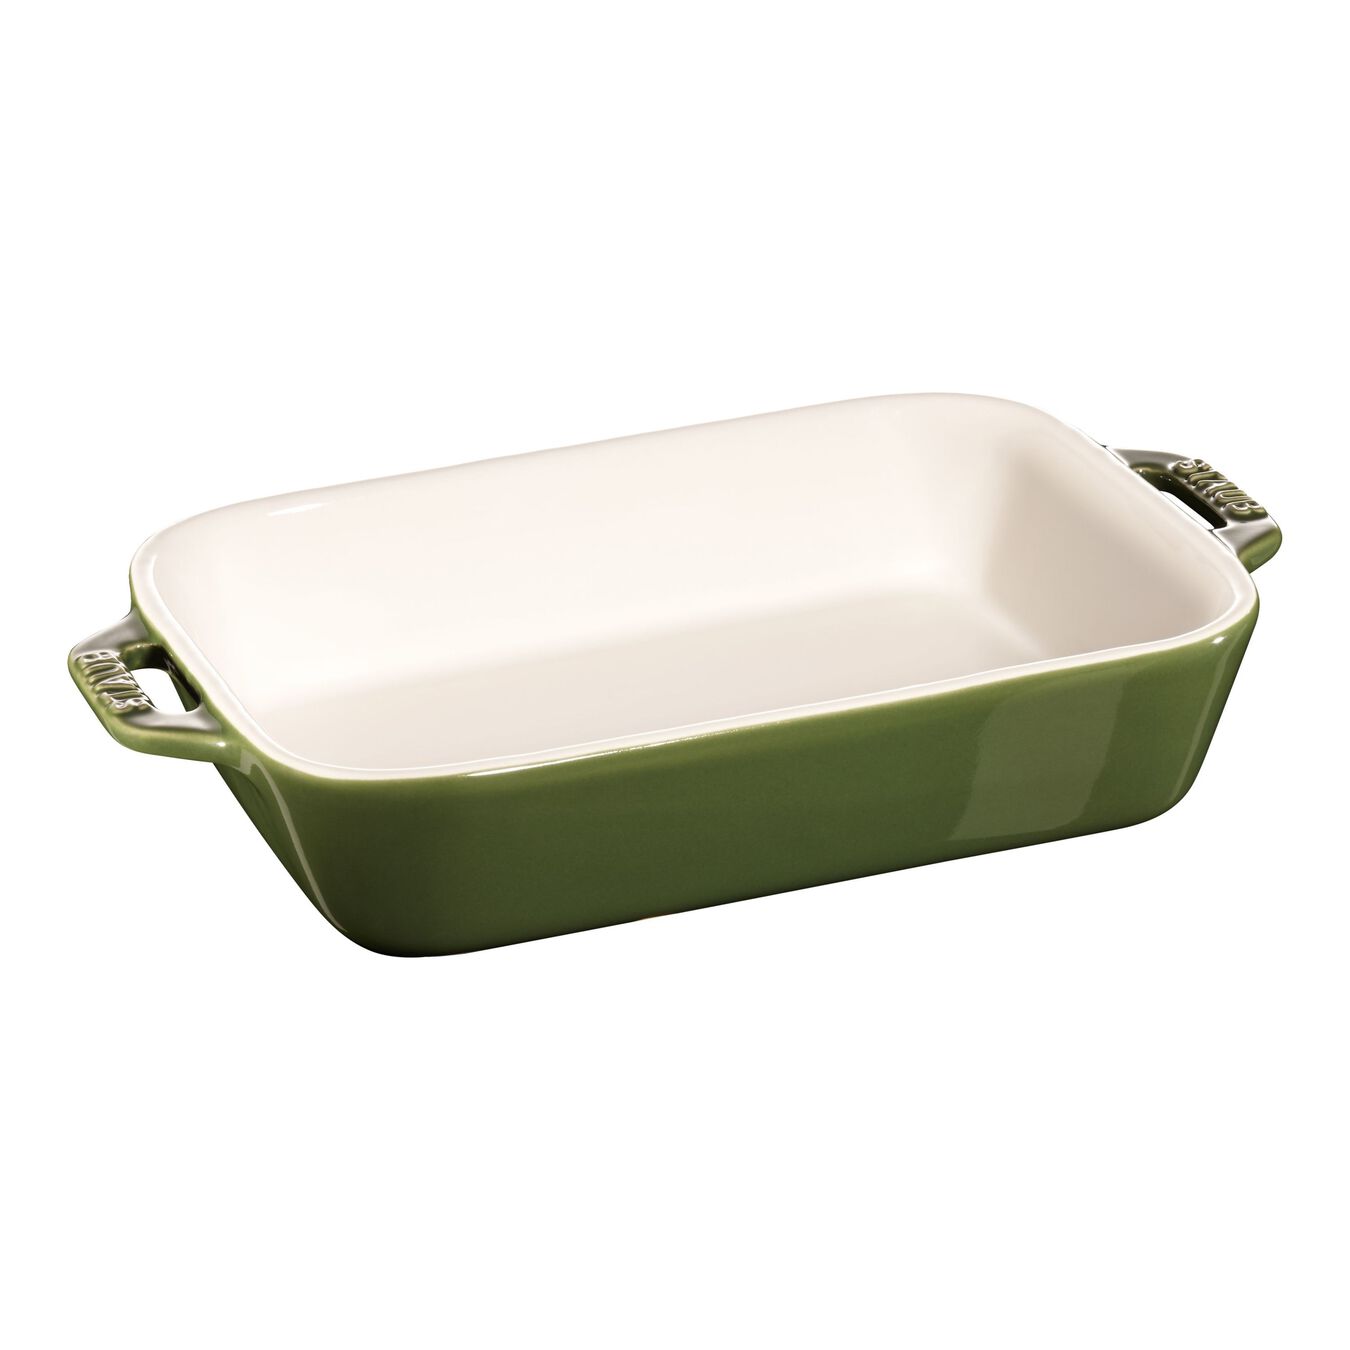 20 cm x 16 cm rectangular Ceramic Oven dish basil-green,,large 1